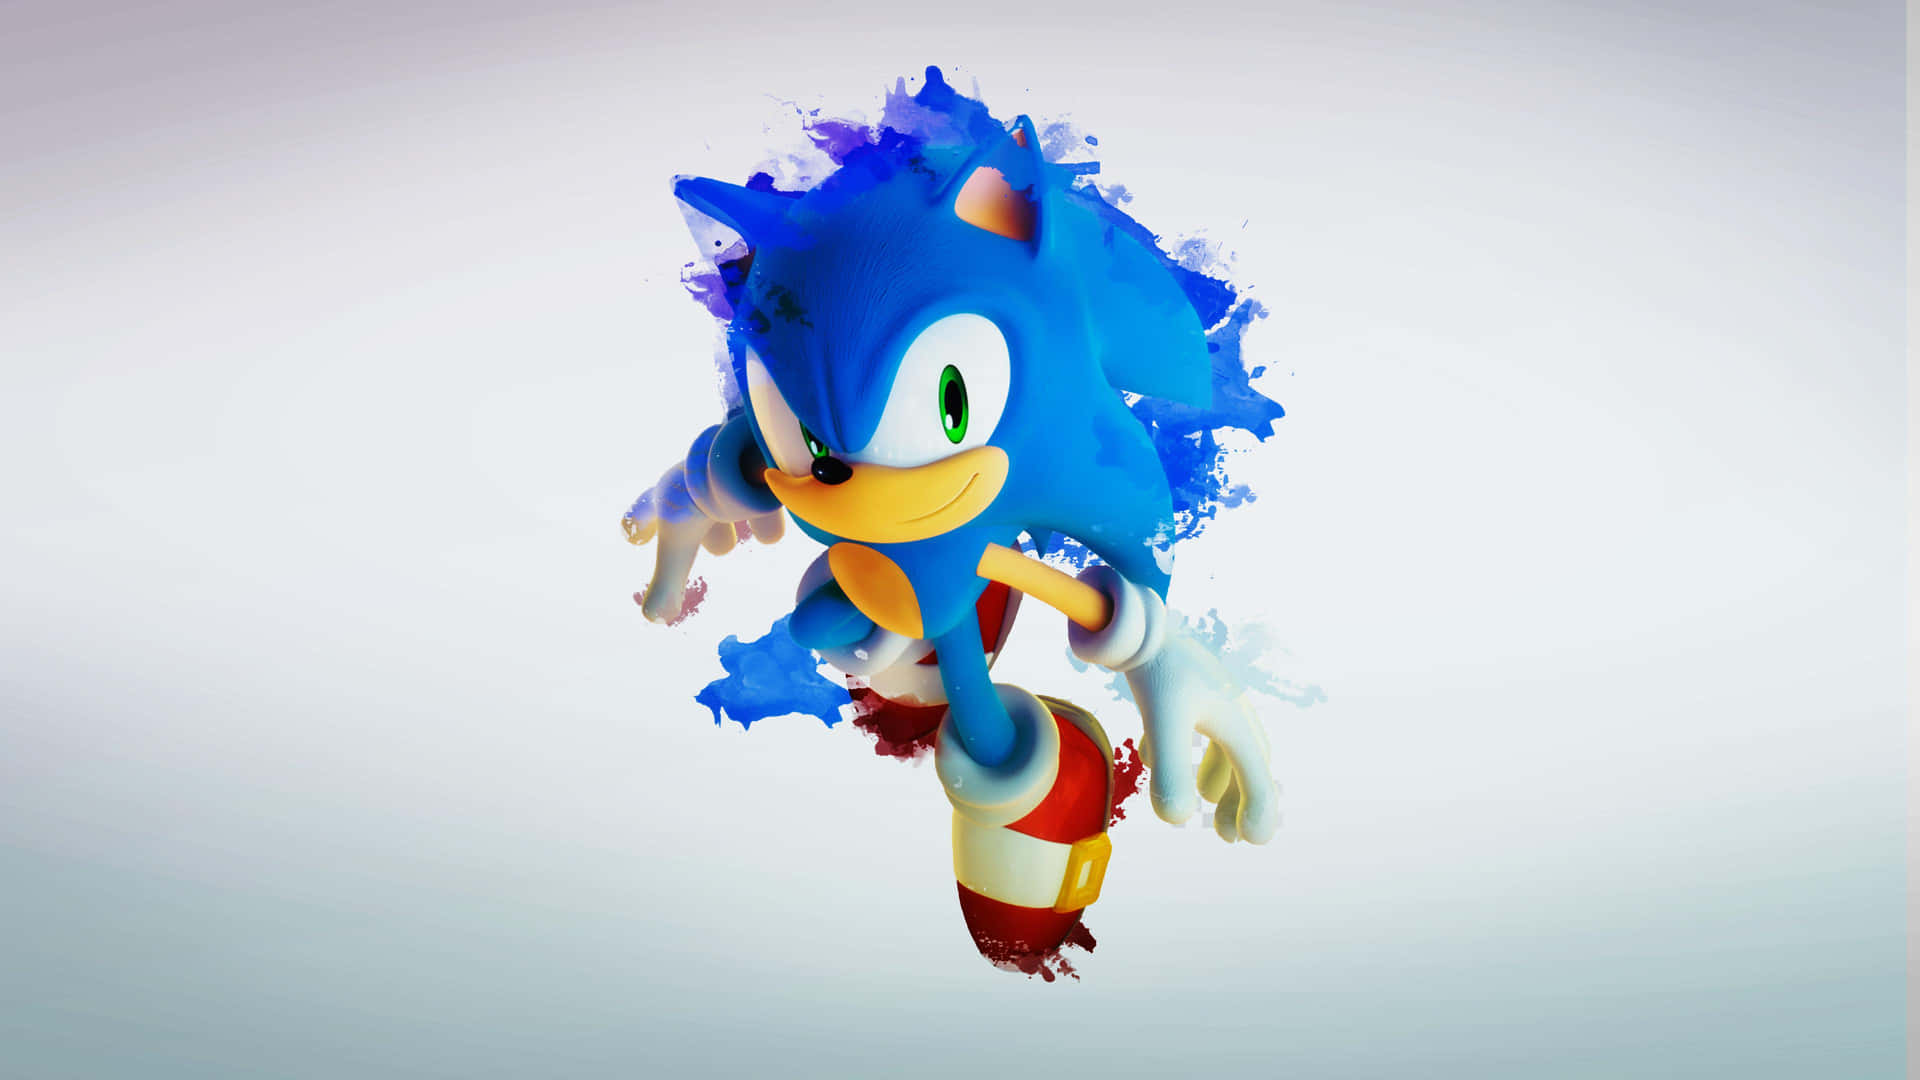 Dynamic Sonic the Hedgehog Illustration Wallpaper